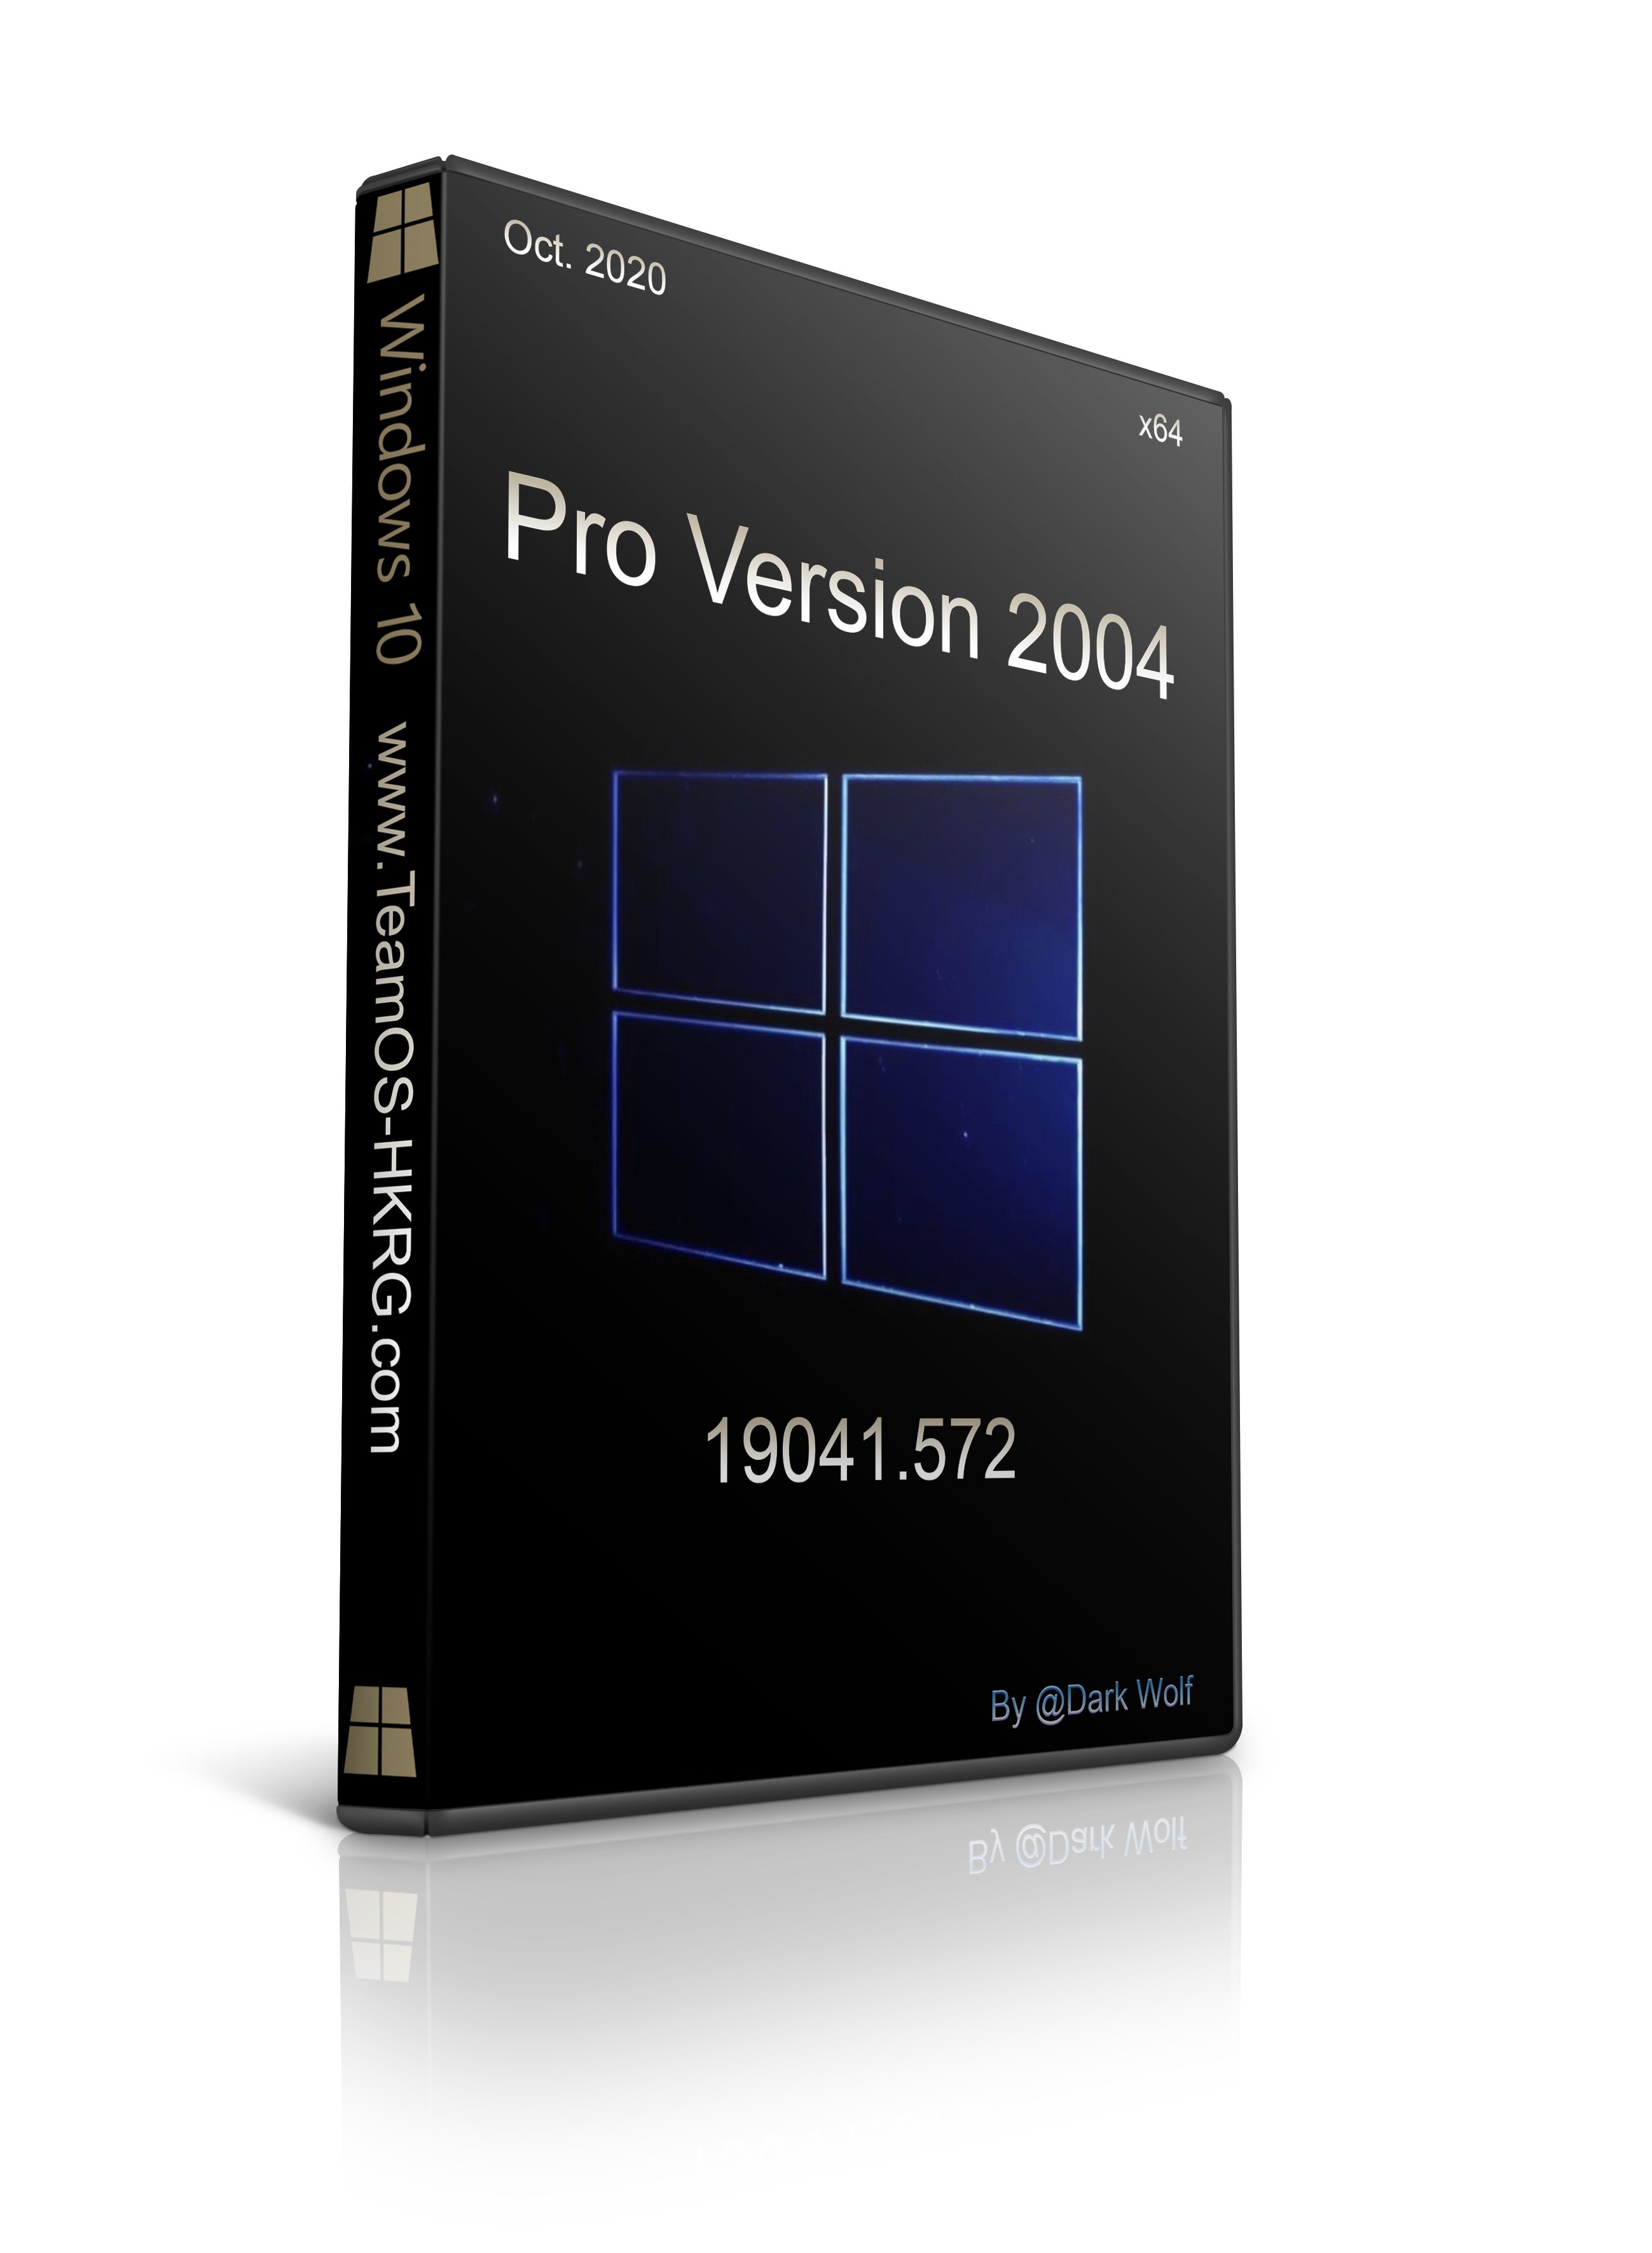 windows 10 pro 2004 key